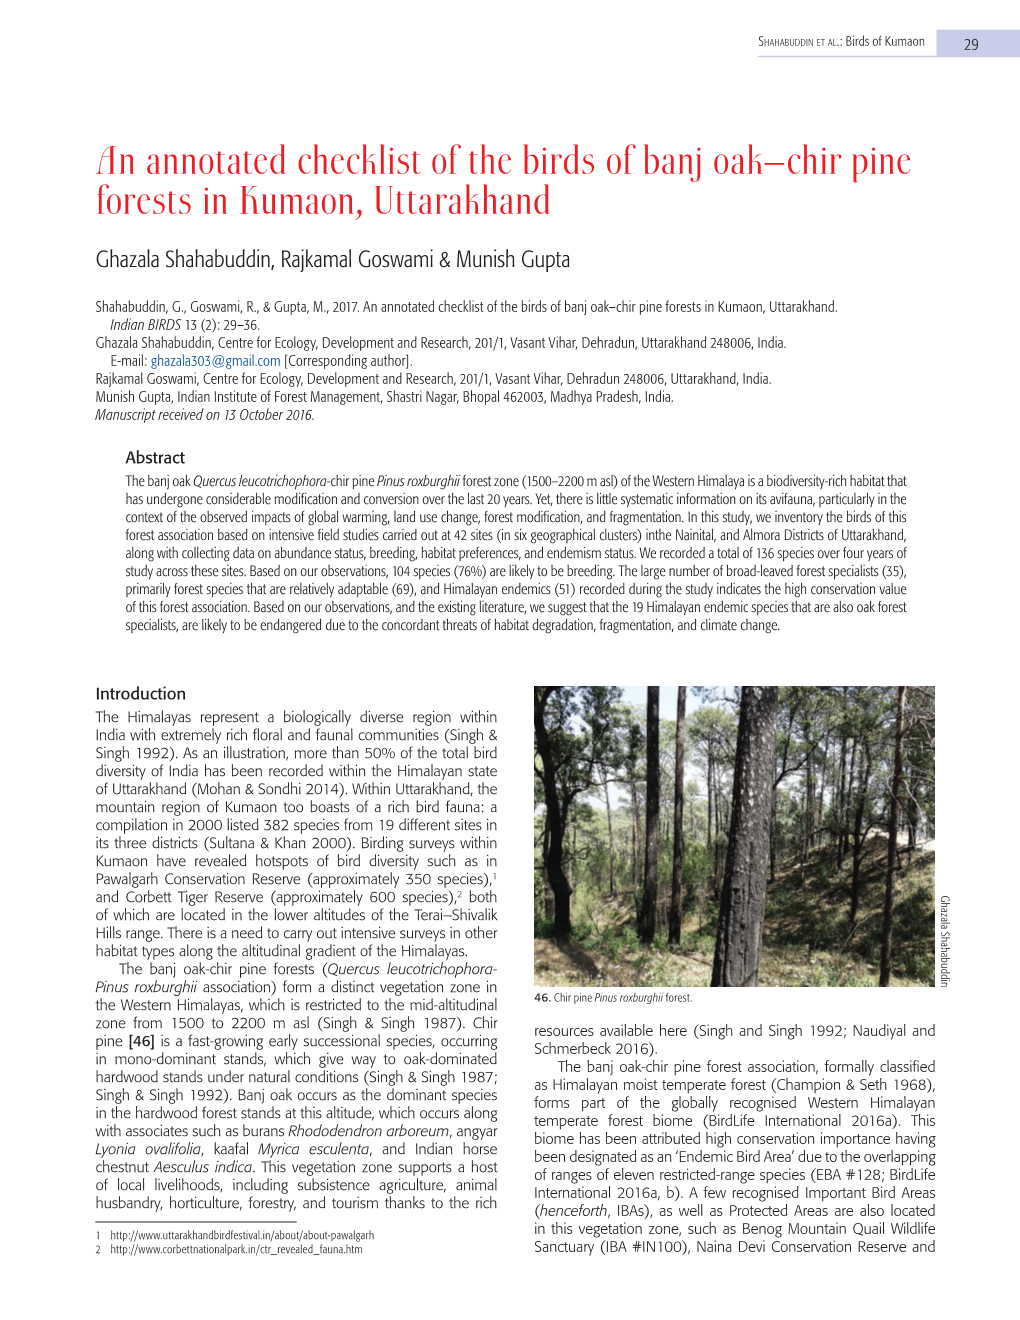 An Annotated Checklist of the Birds of Banj Oak–Chir Pine Forests in Kumaon, Uttarakhand